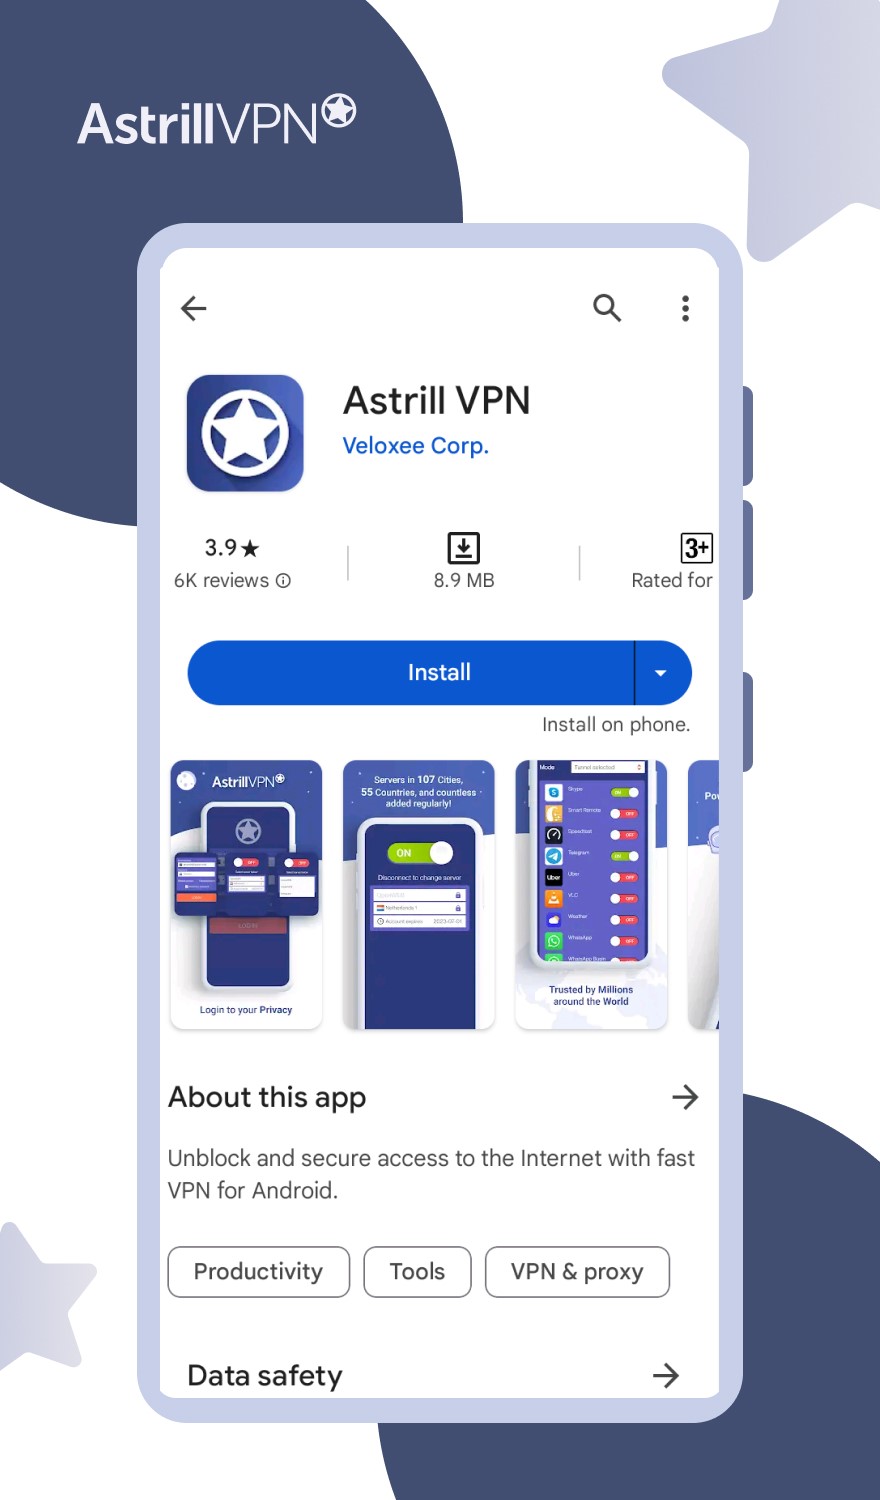 Download the AstrillVPN app